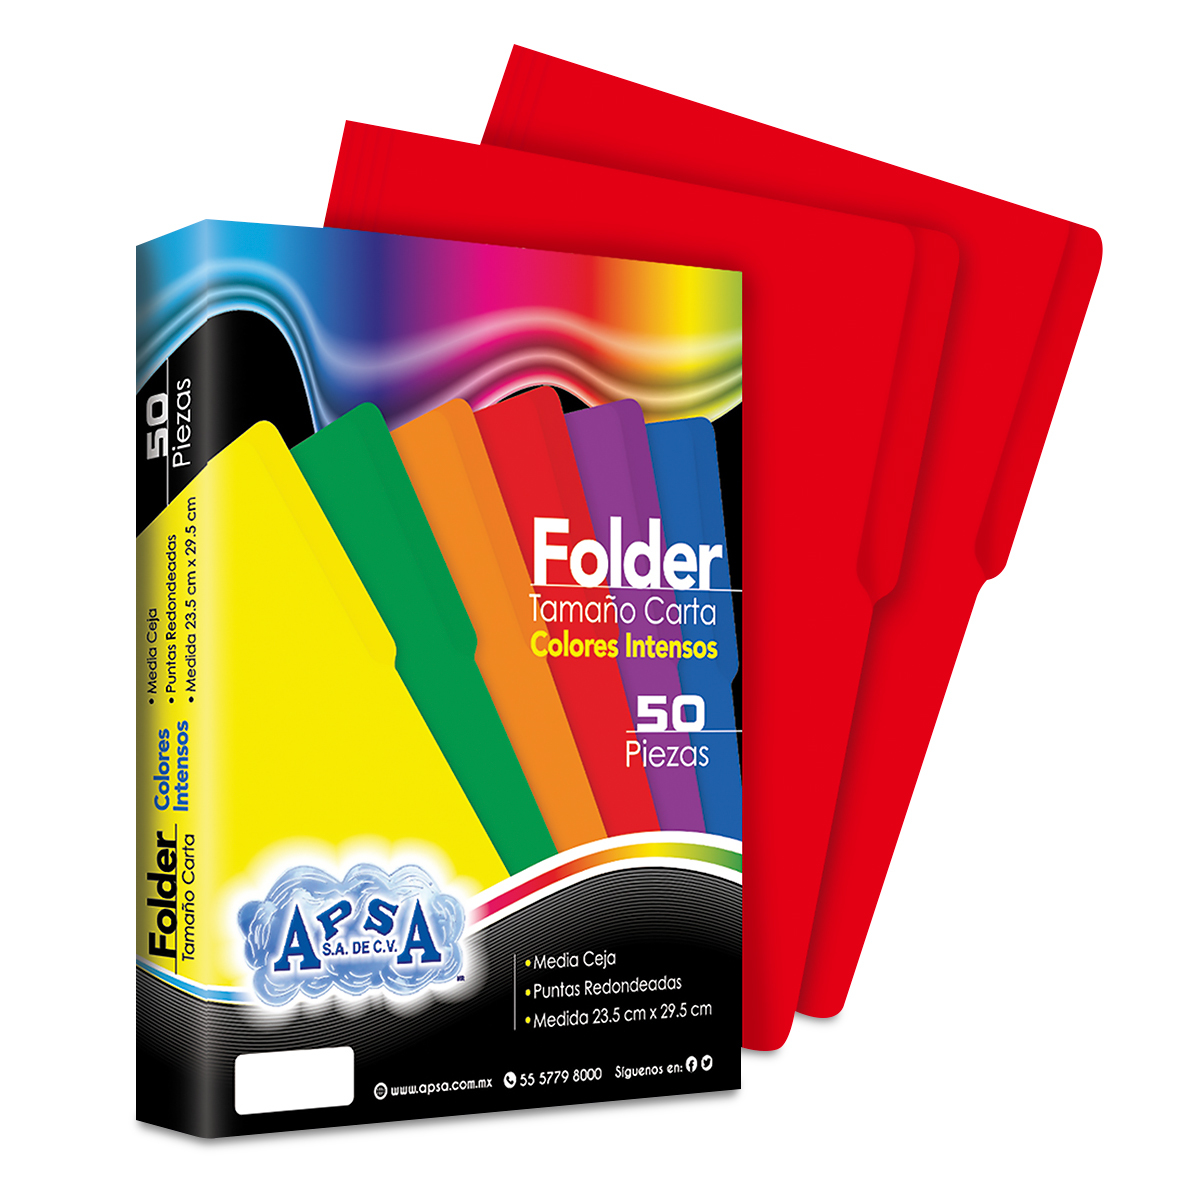 Folders Carta con Media Ceja APSA Rojo 50 piezas | Office Depot Mexico